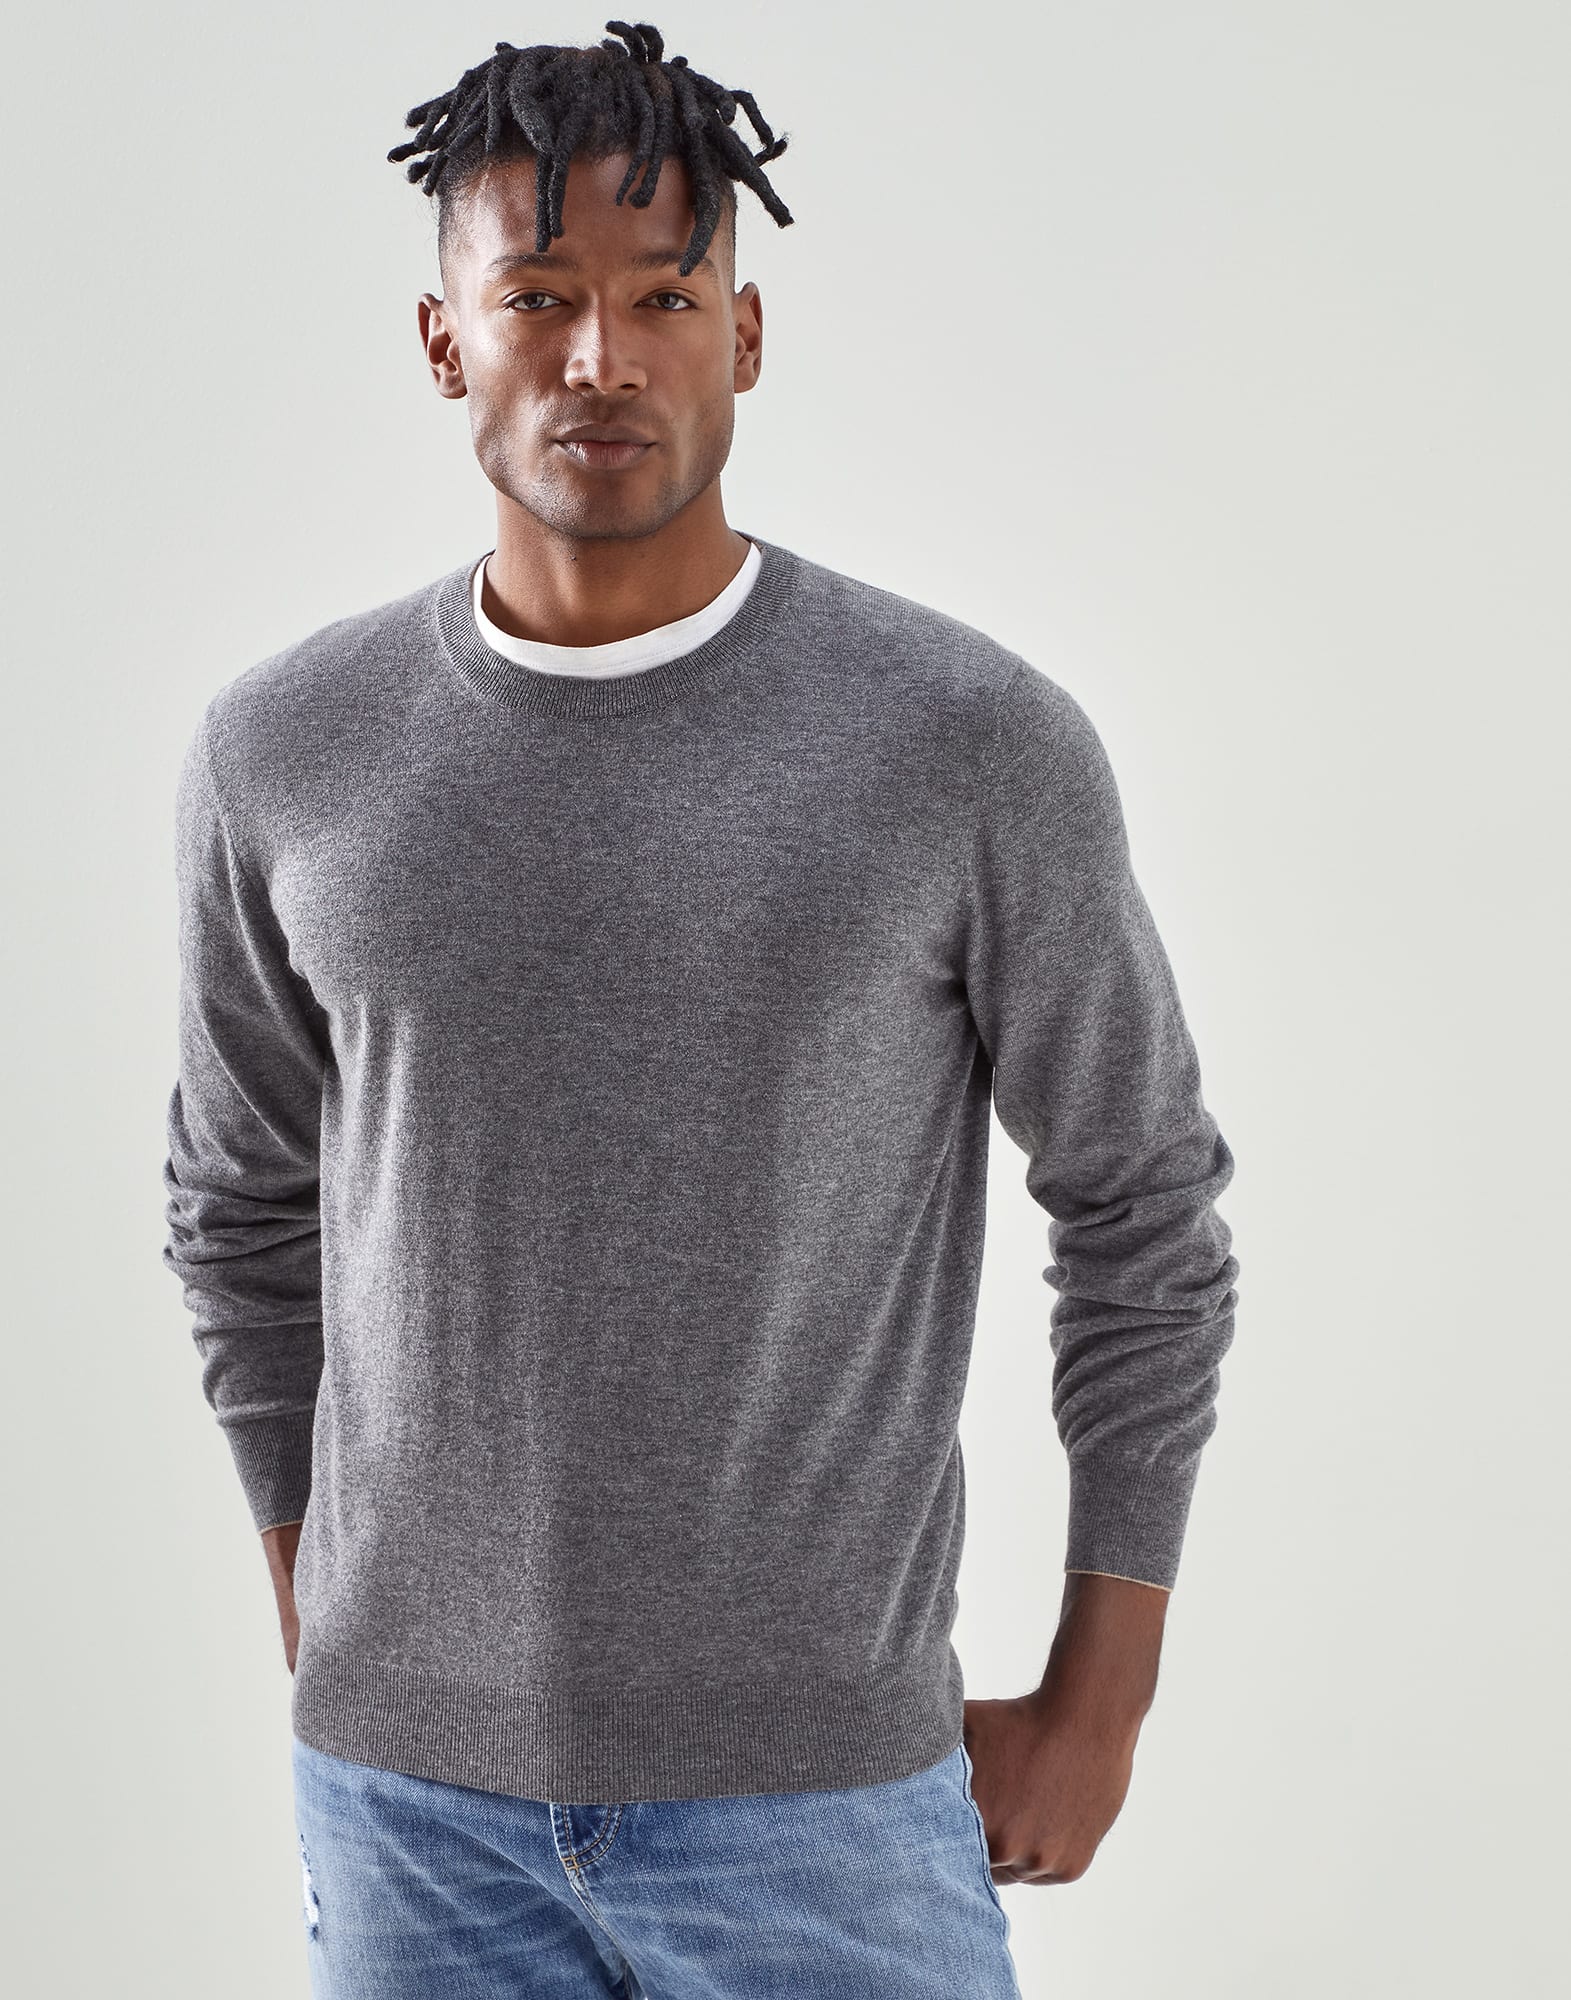 Cashmere Lithe yarn sweater (232M2Q00100) for Man | Brunello Cucinelli